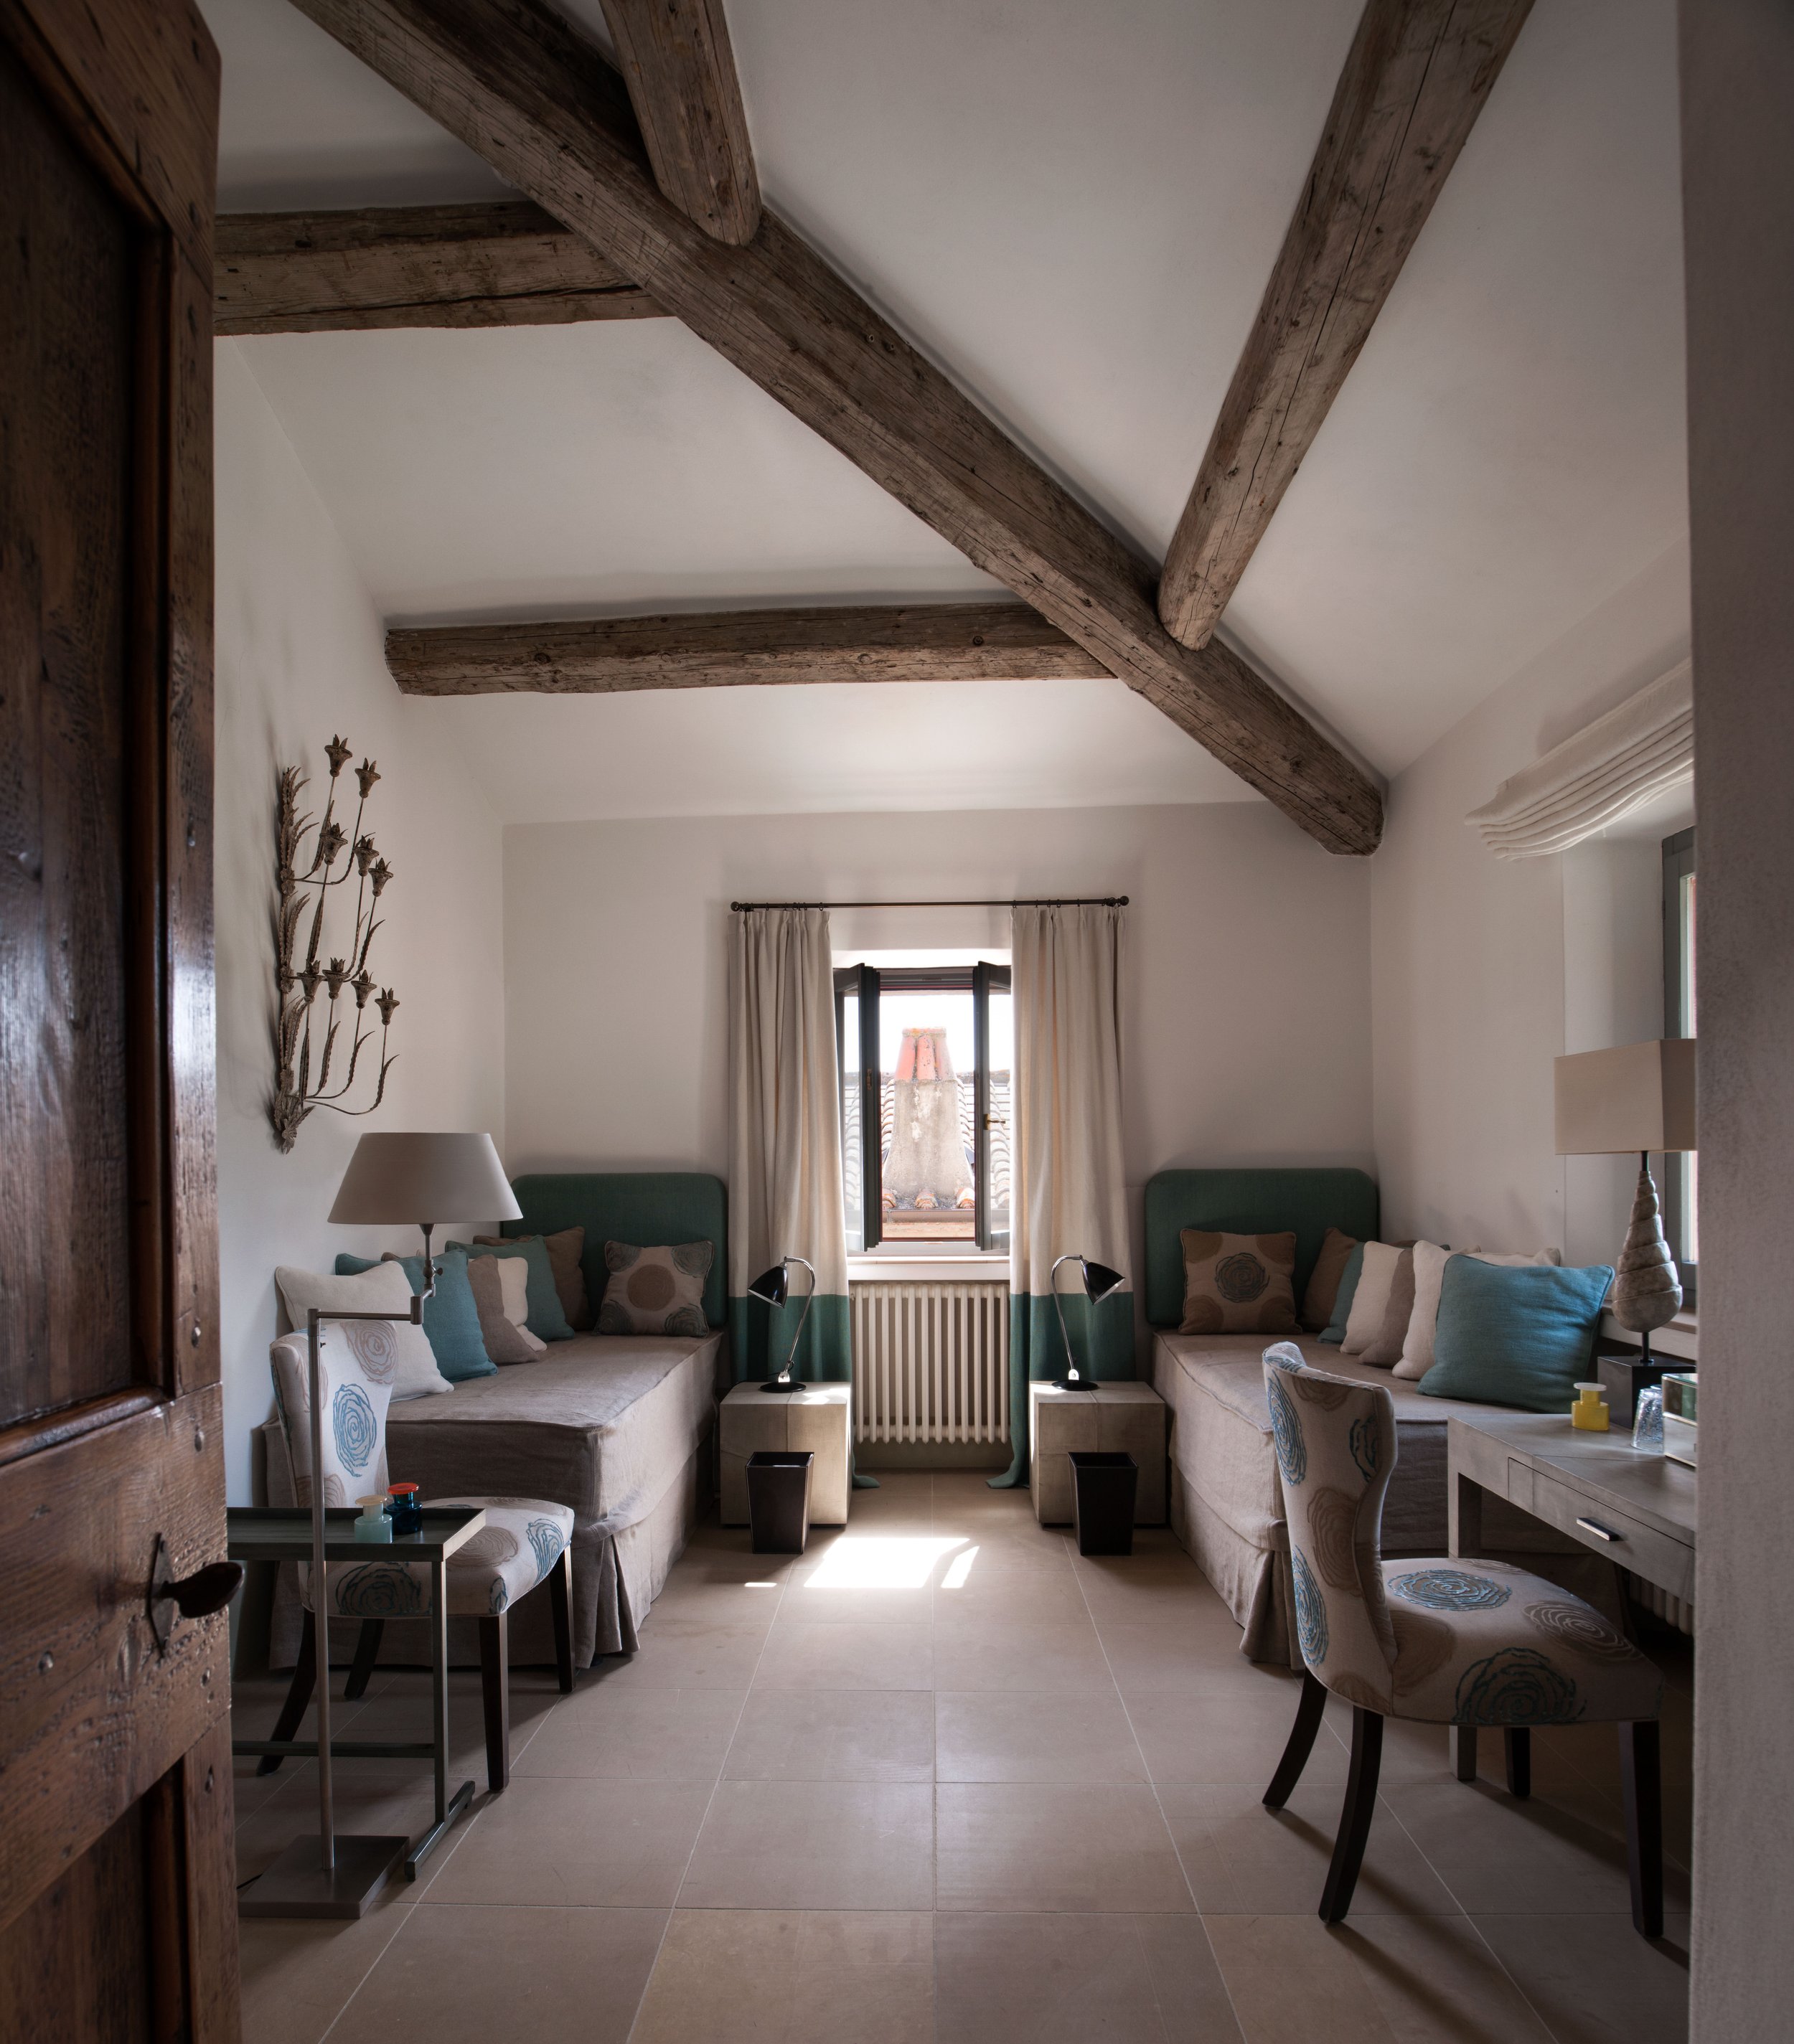 Francis York Exclusive Luxury Villa Rental in Umbria, Italy 15.jpg